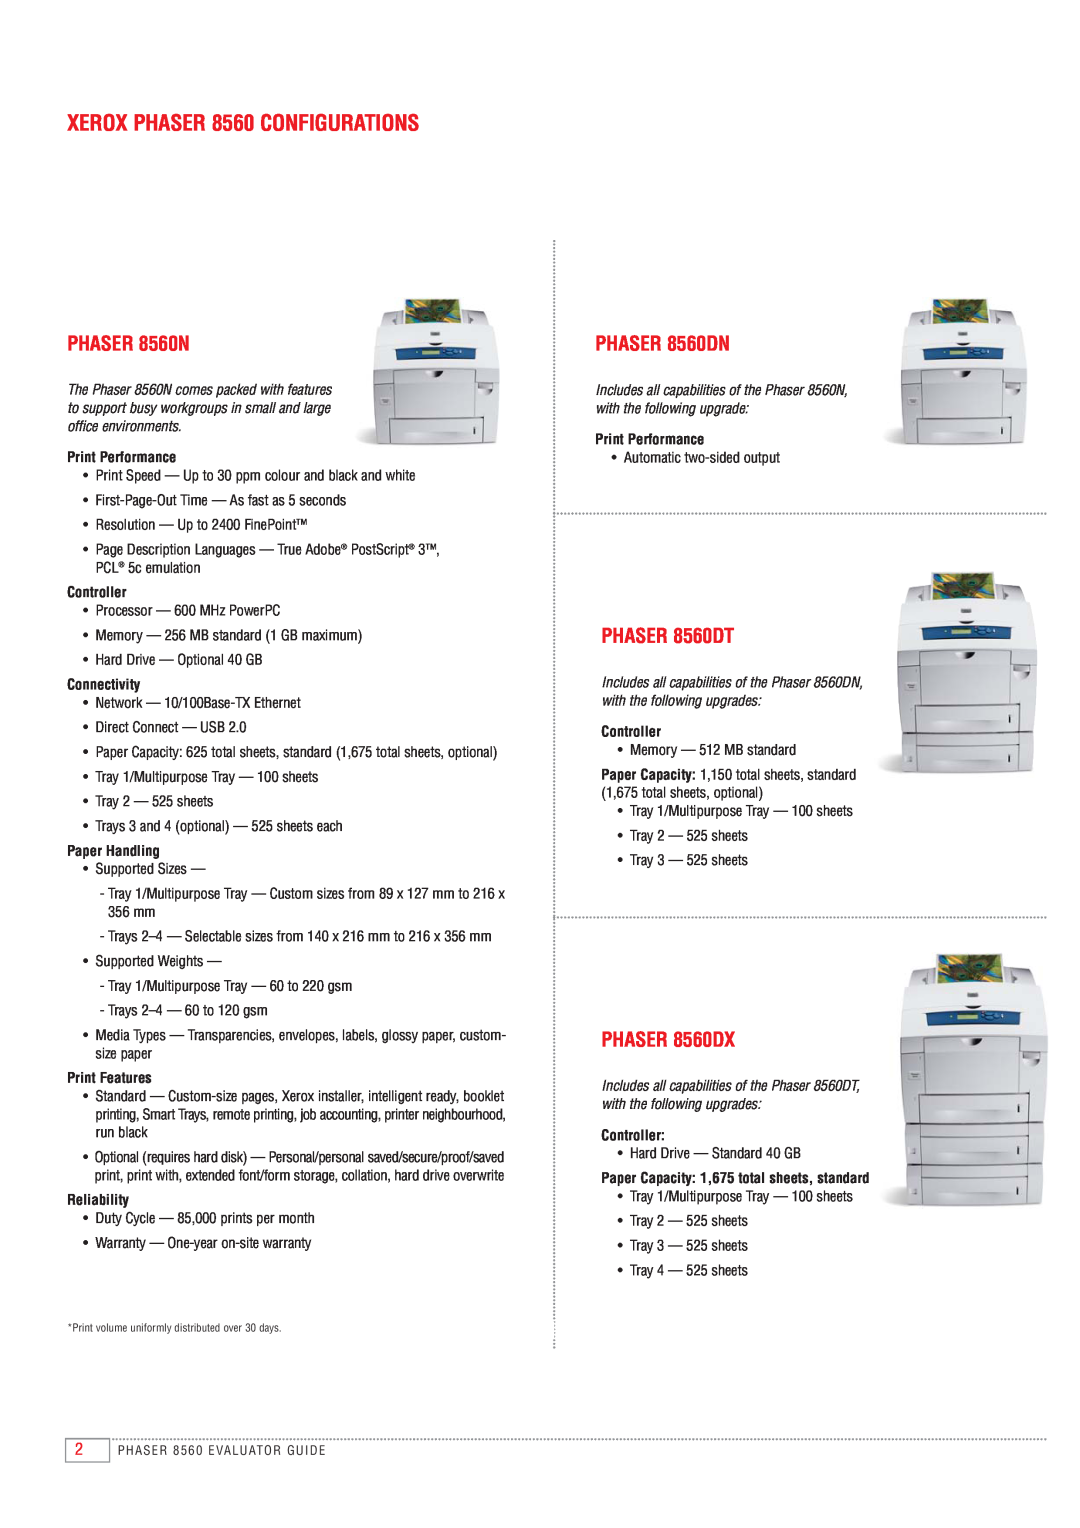 Xerox manual XEROX PHASER 8560 CONFIGURATIONS, PHASER 8560N, PHASER 8560DN, PHASER 8560DT, PHASER 8560DX 